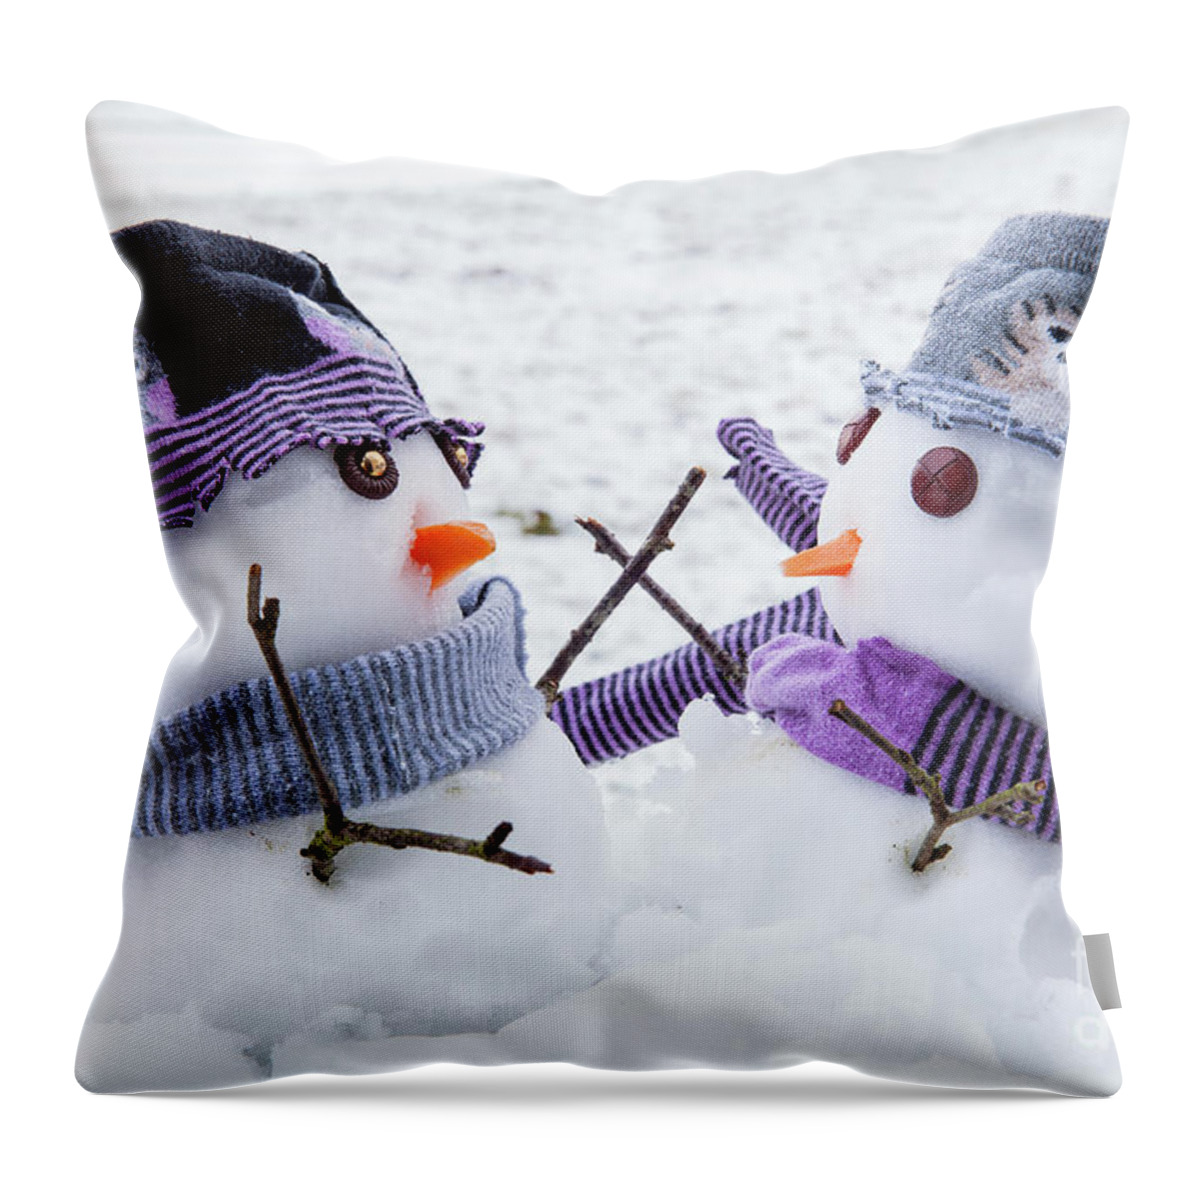 Snowmen Throw Pillow featuring the photograph Two cute snowmen friends embracing by Simon Bratt